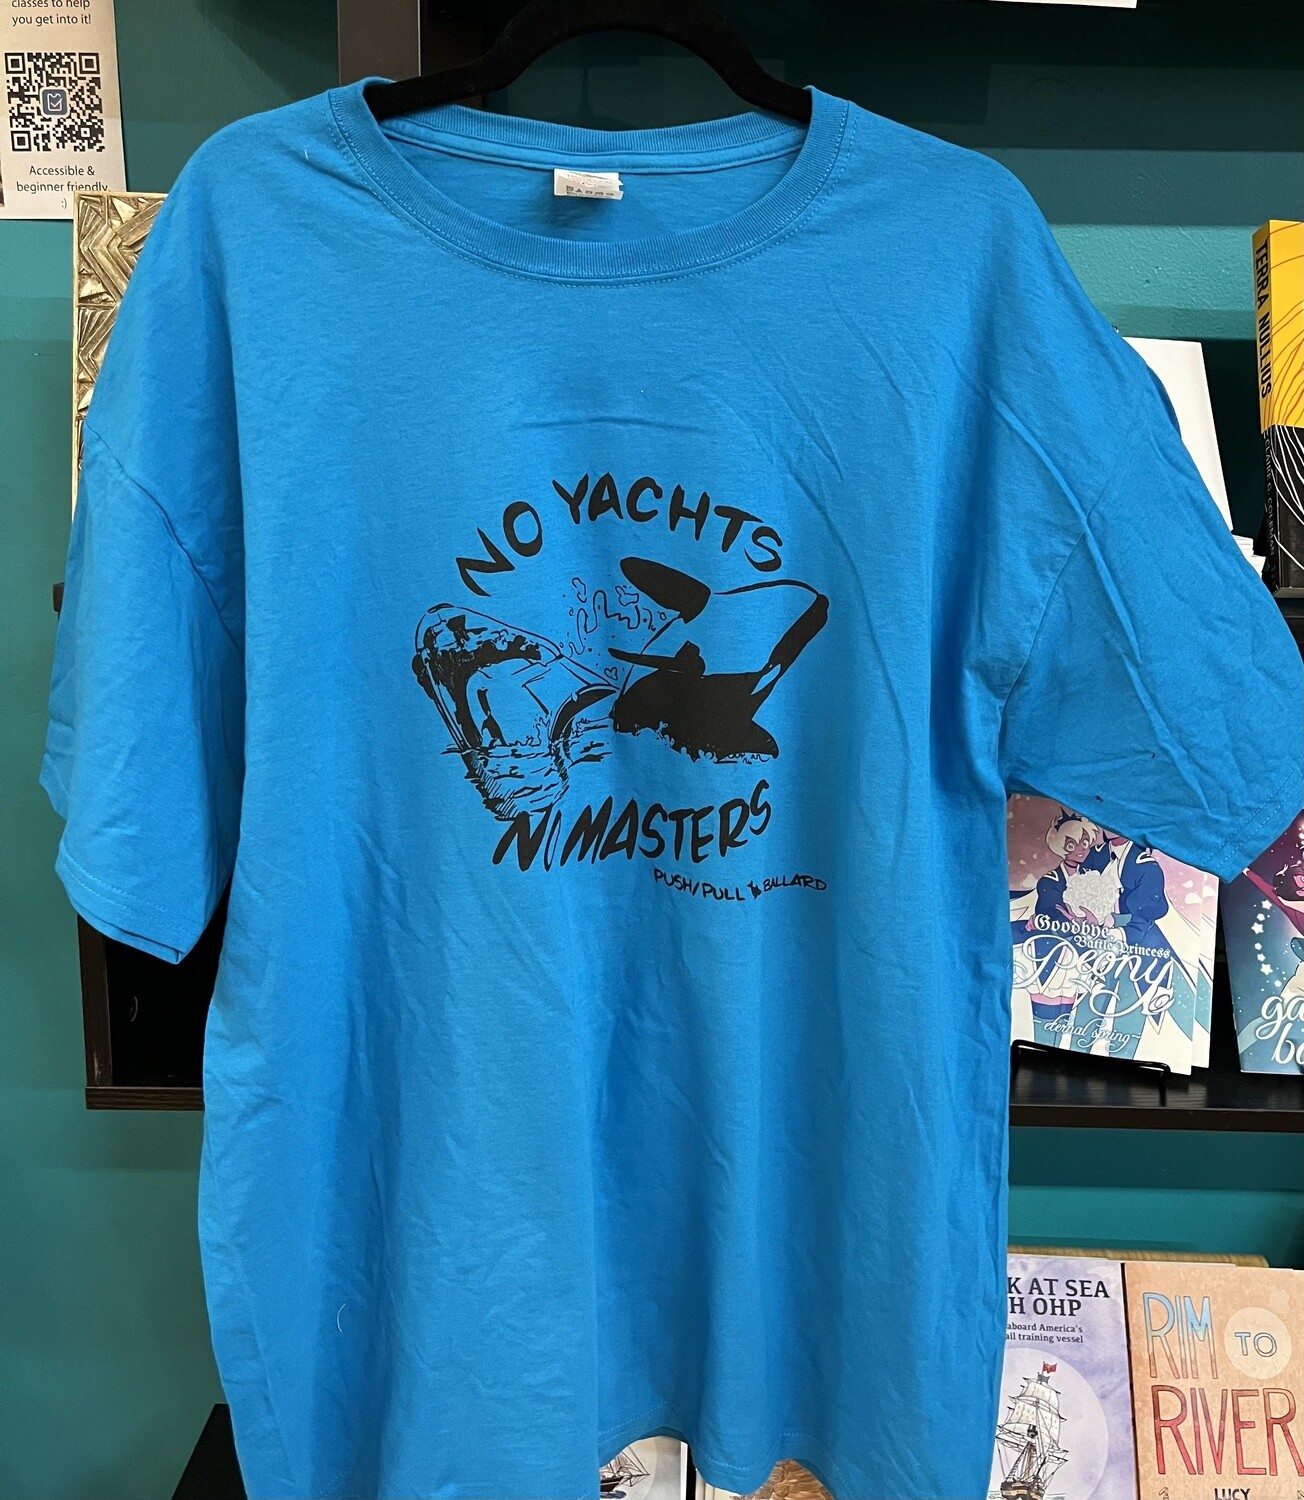 NO YACHTS, NO MASTERS - Aqua Blue t-shirt by Push/Pull